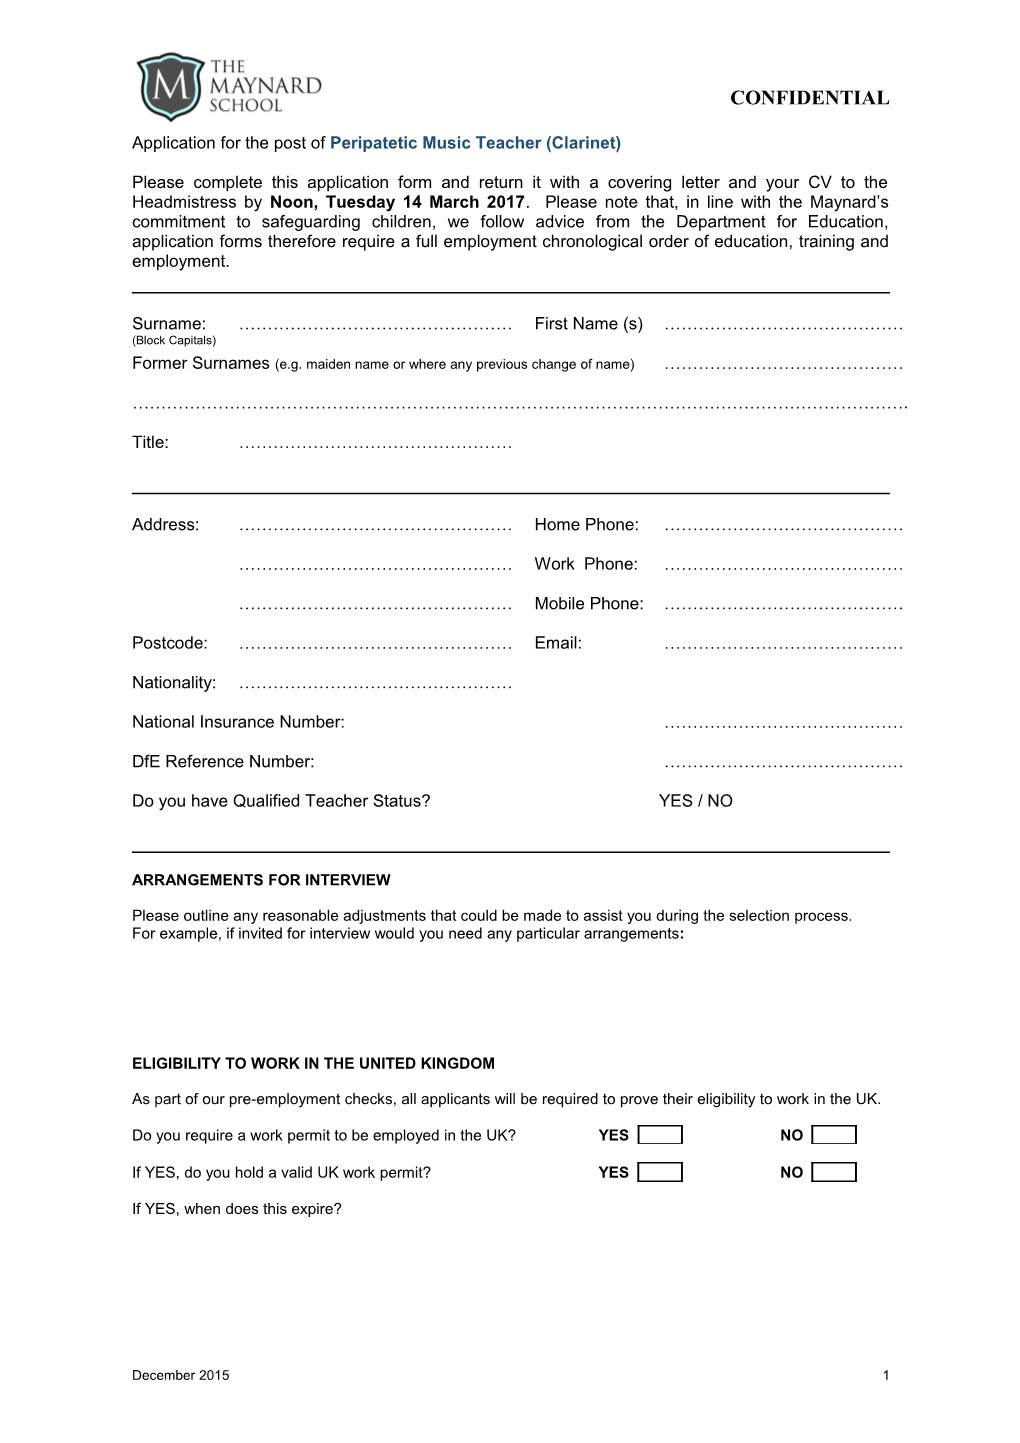 THE MAYNARD SCHOOL - Application Form